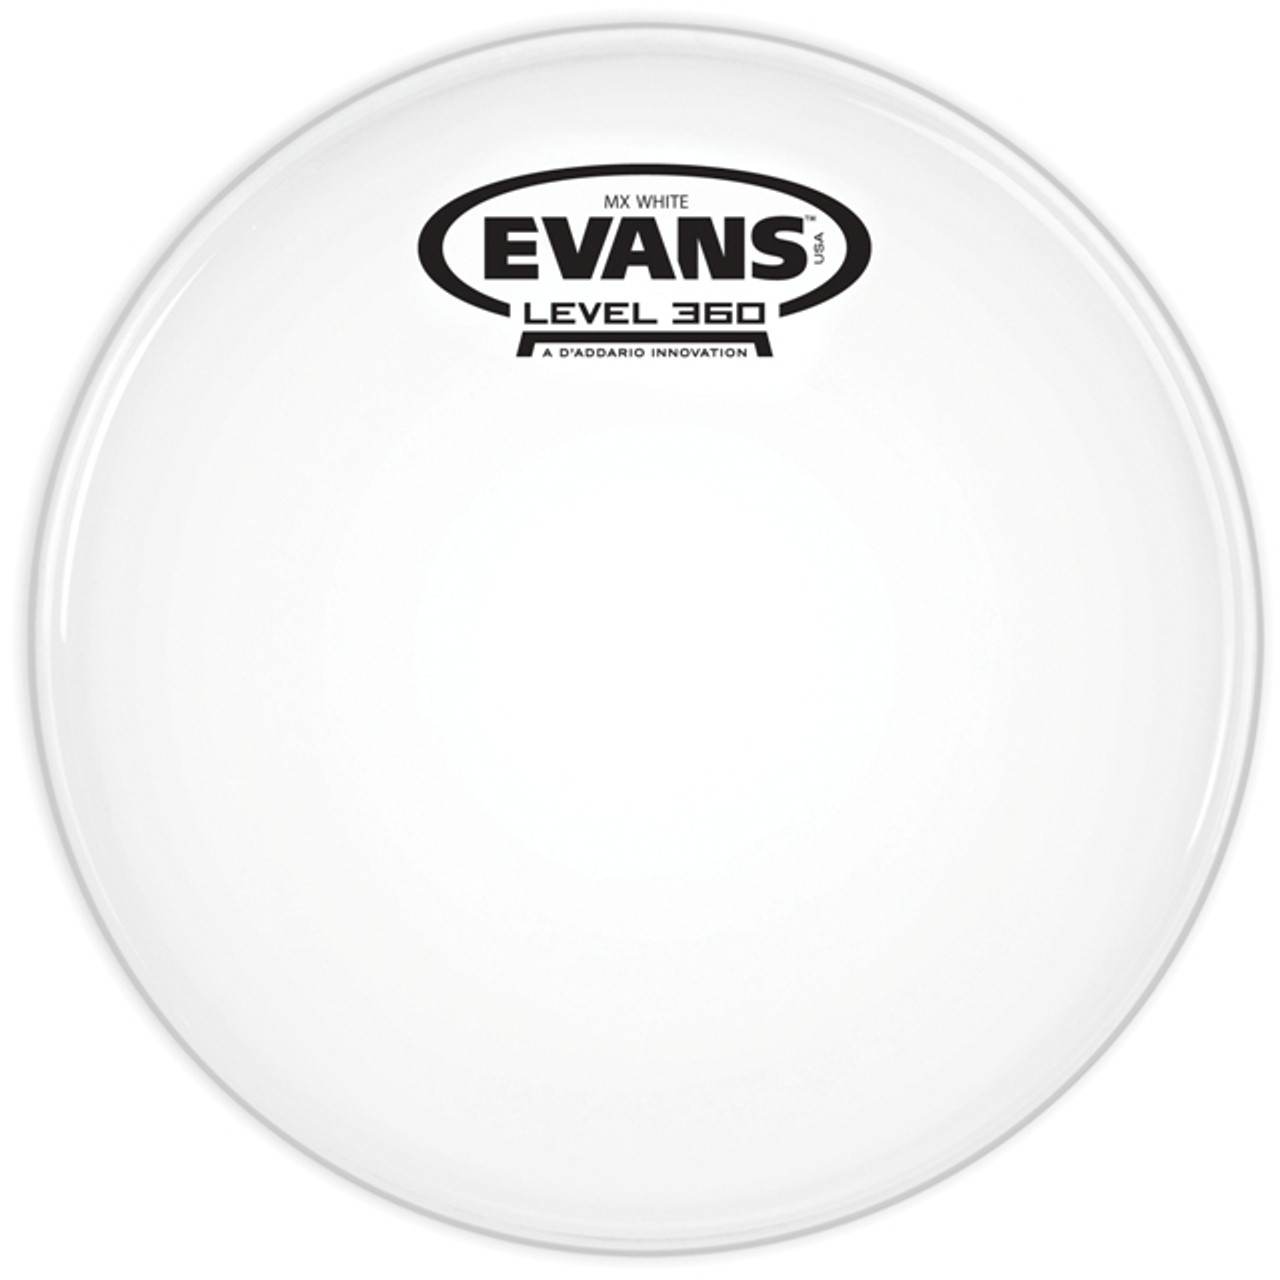 Evans MX White Marching Tenor Drum Head, 10 Inch